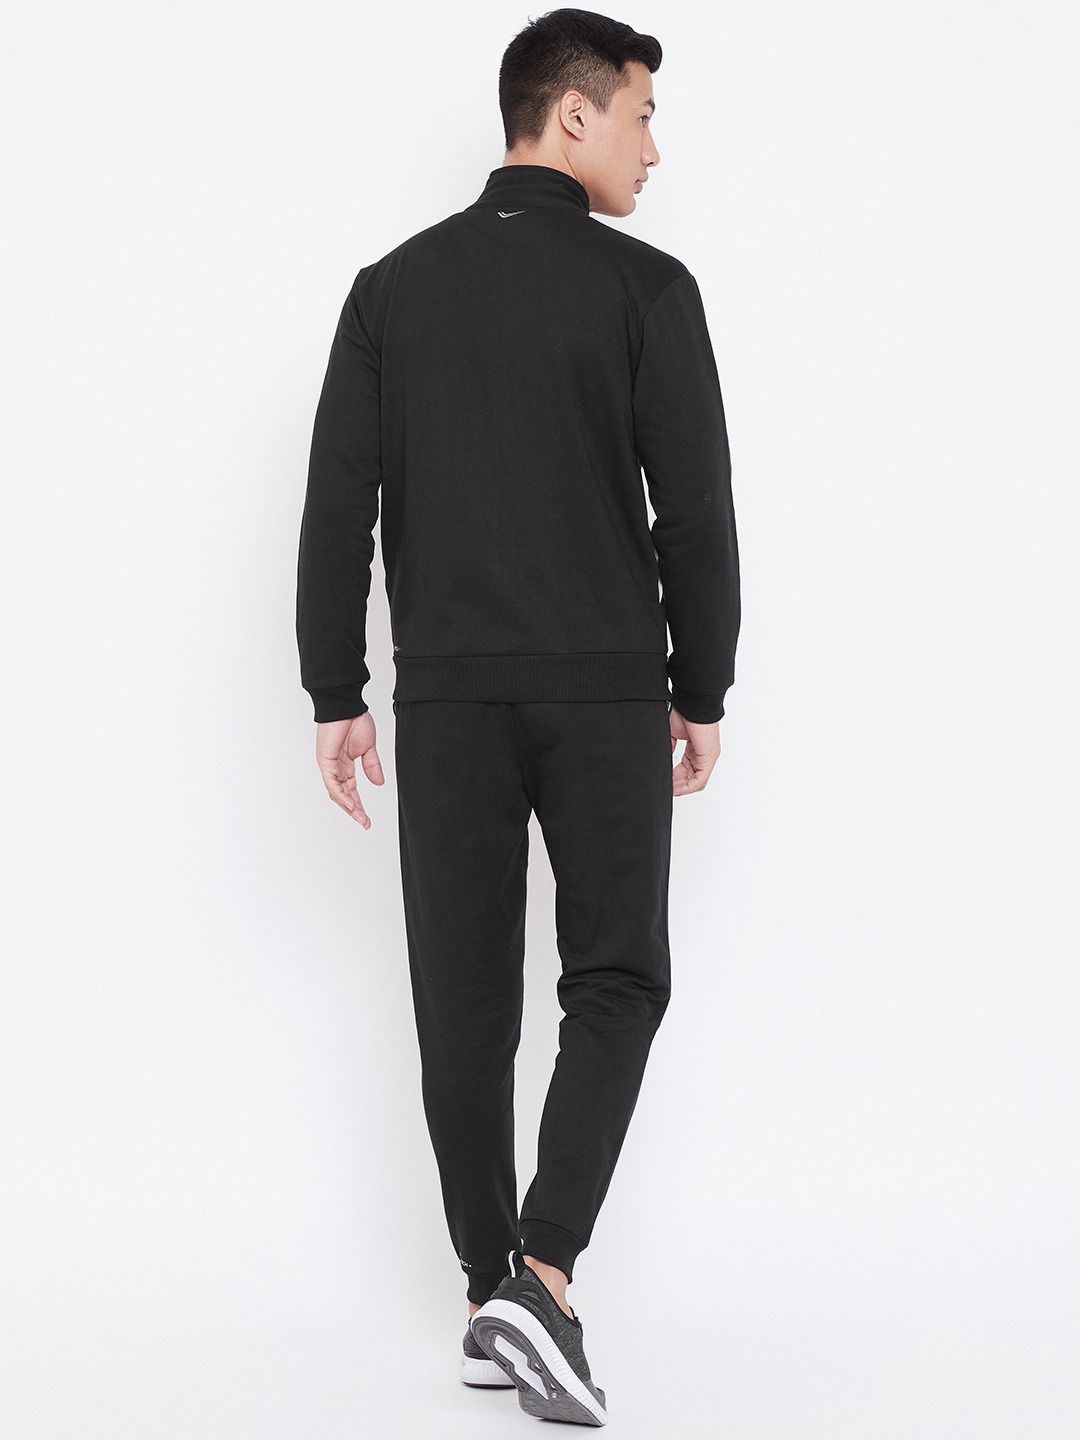 Clothing Tracksuits | Yuuki Men Black Solid Tracksuit - CX80215